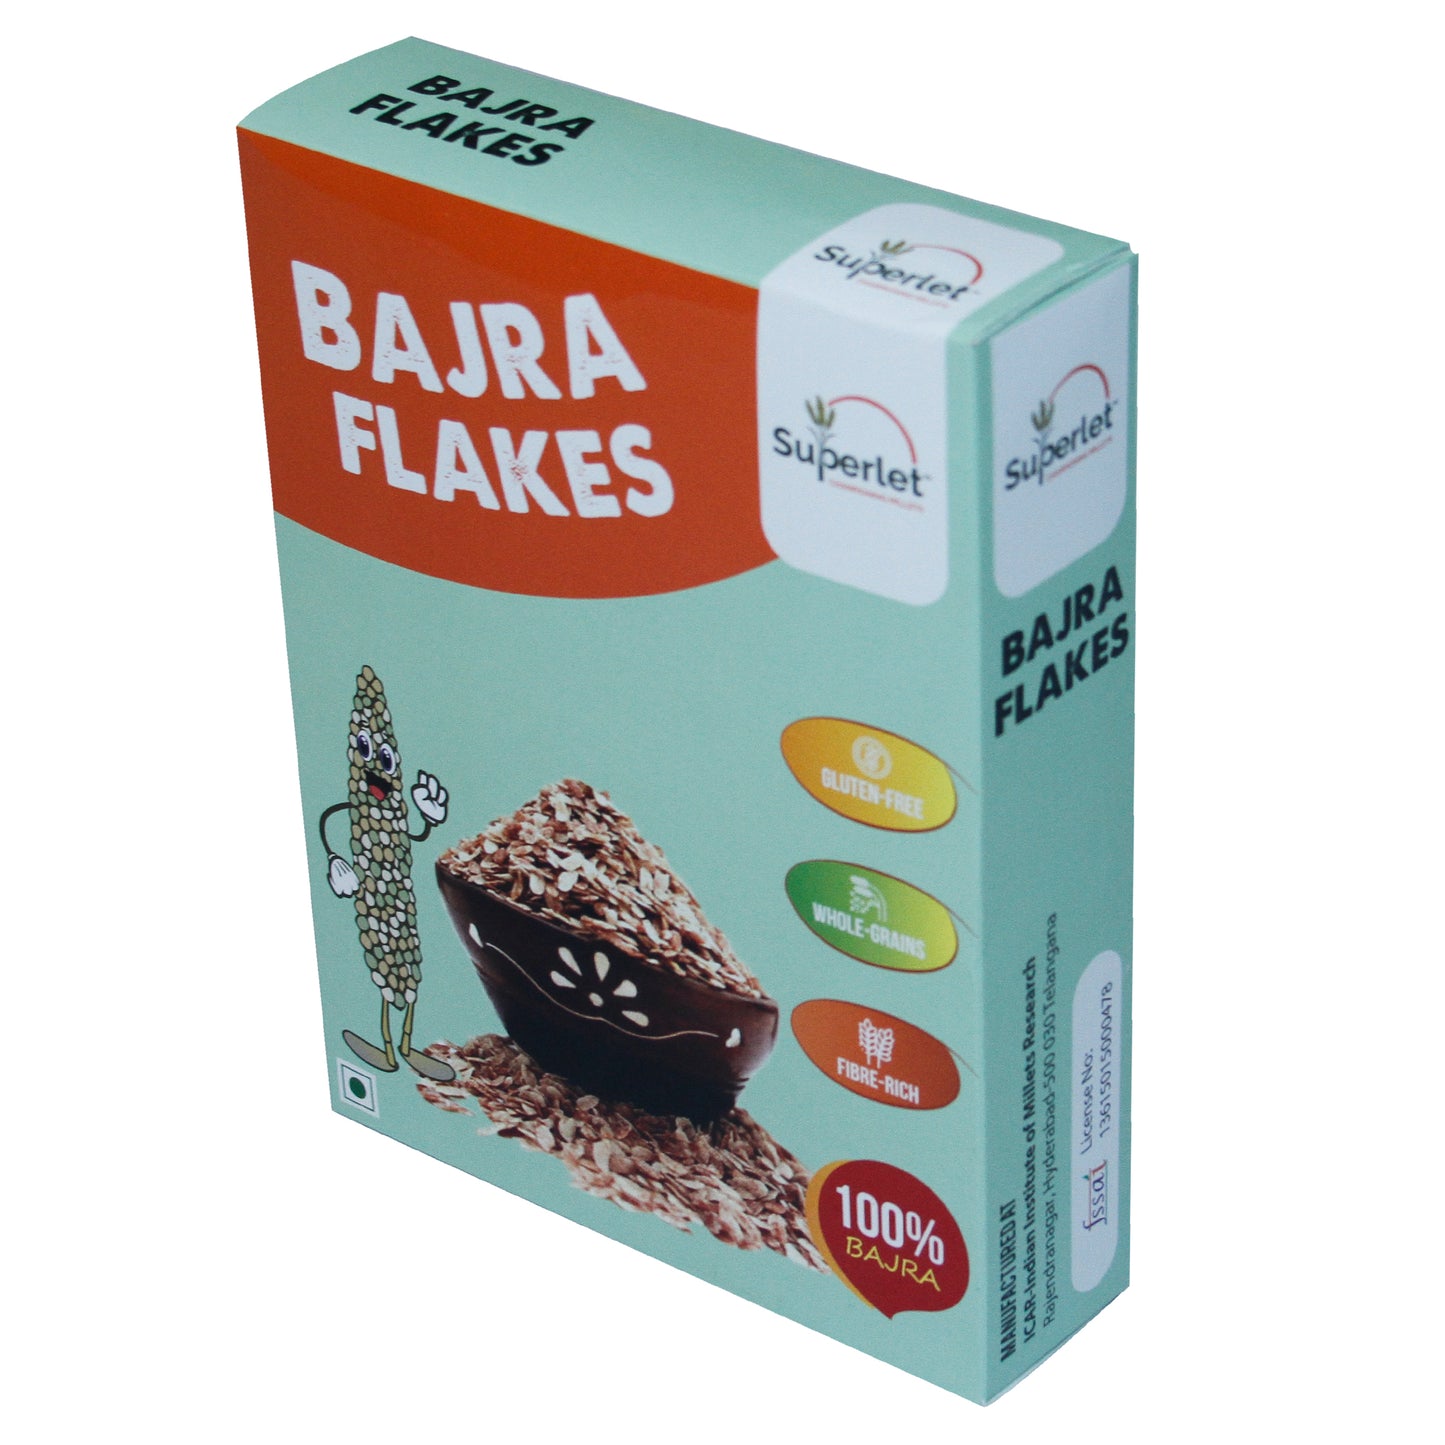 Bajra Flakes